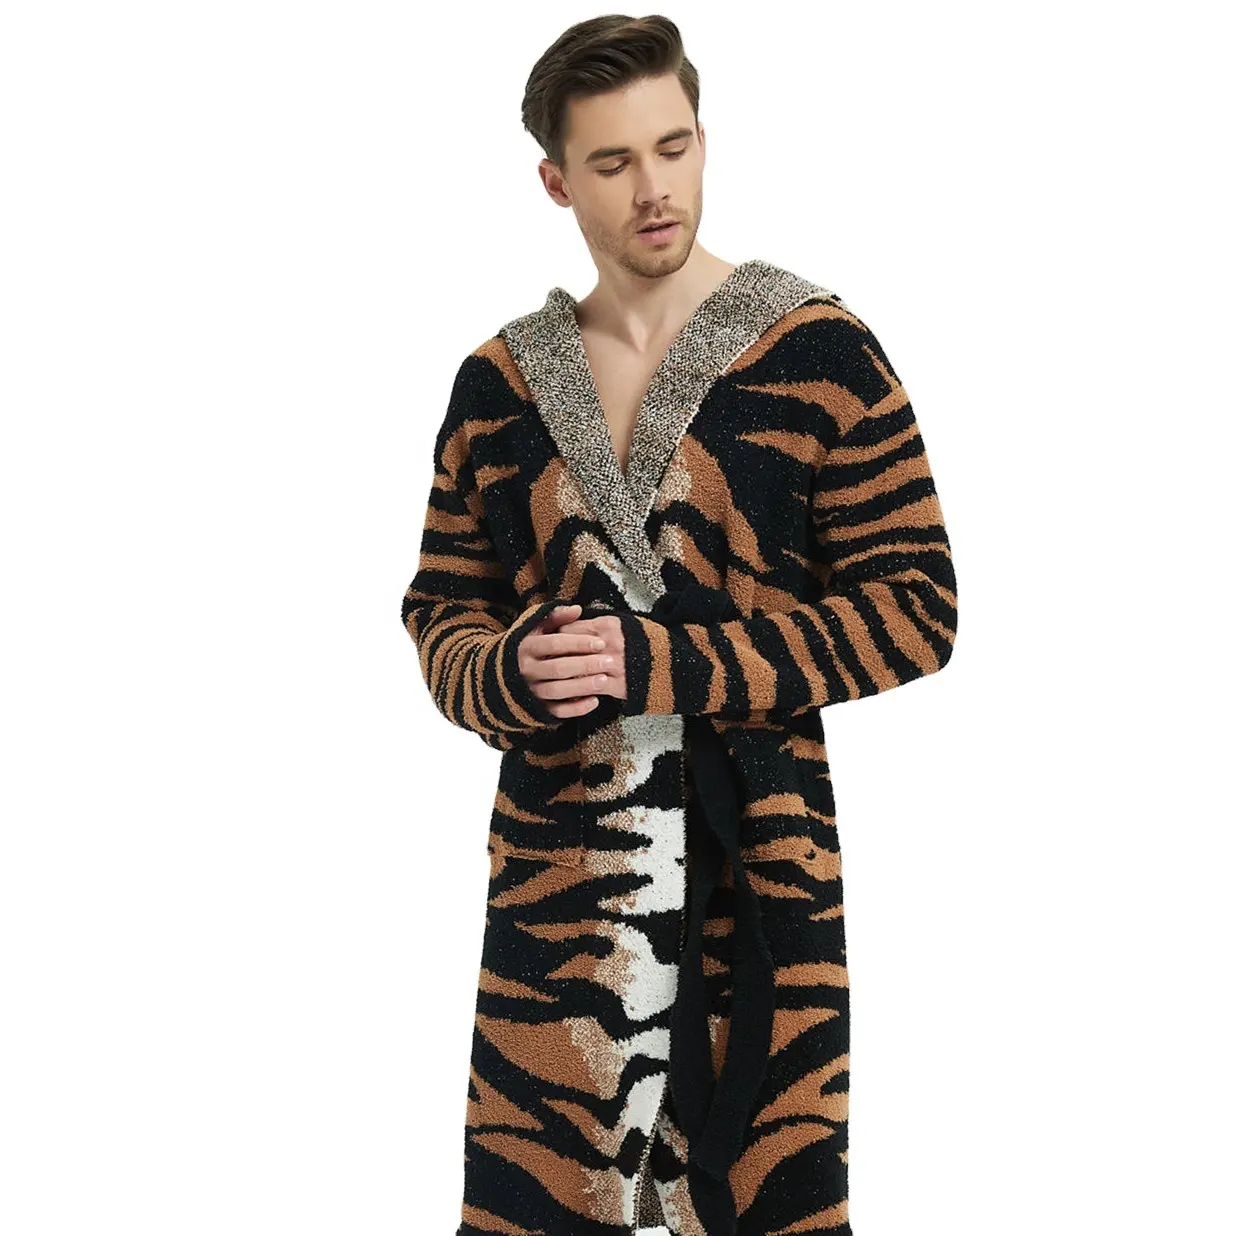 Super Soft Home Suit Sleepwear Wholesale New Style Tiger Pattern Microfiber Men Pajamas European Customized Designs 1 Piece 1.3